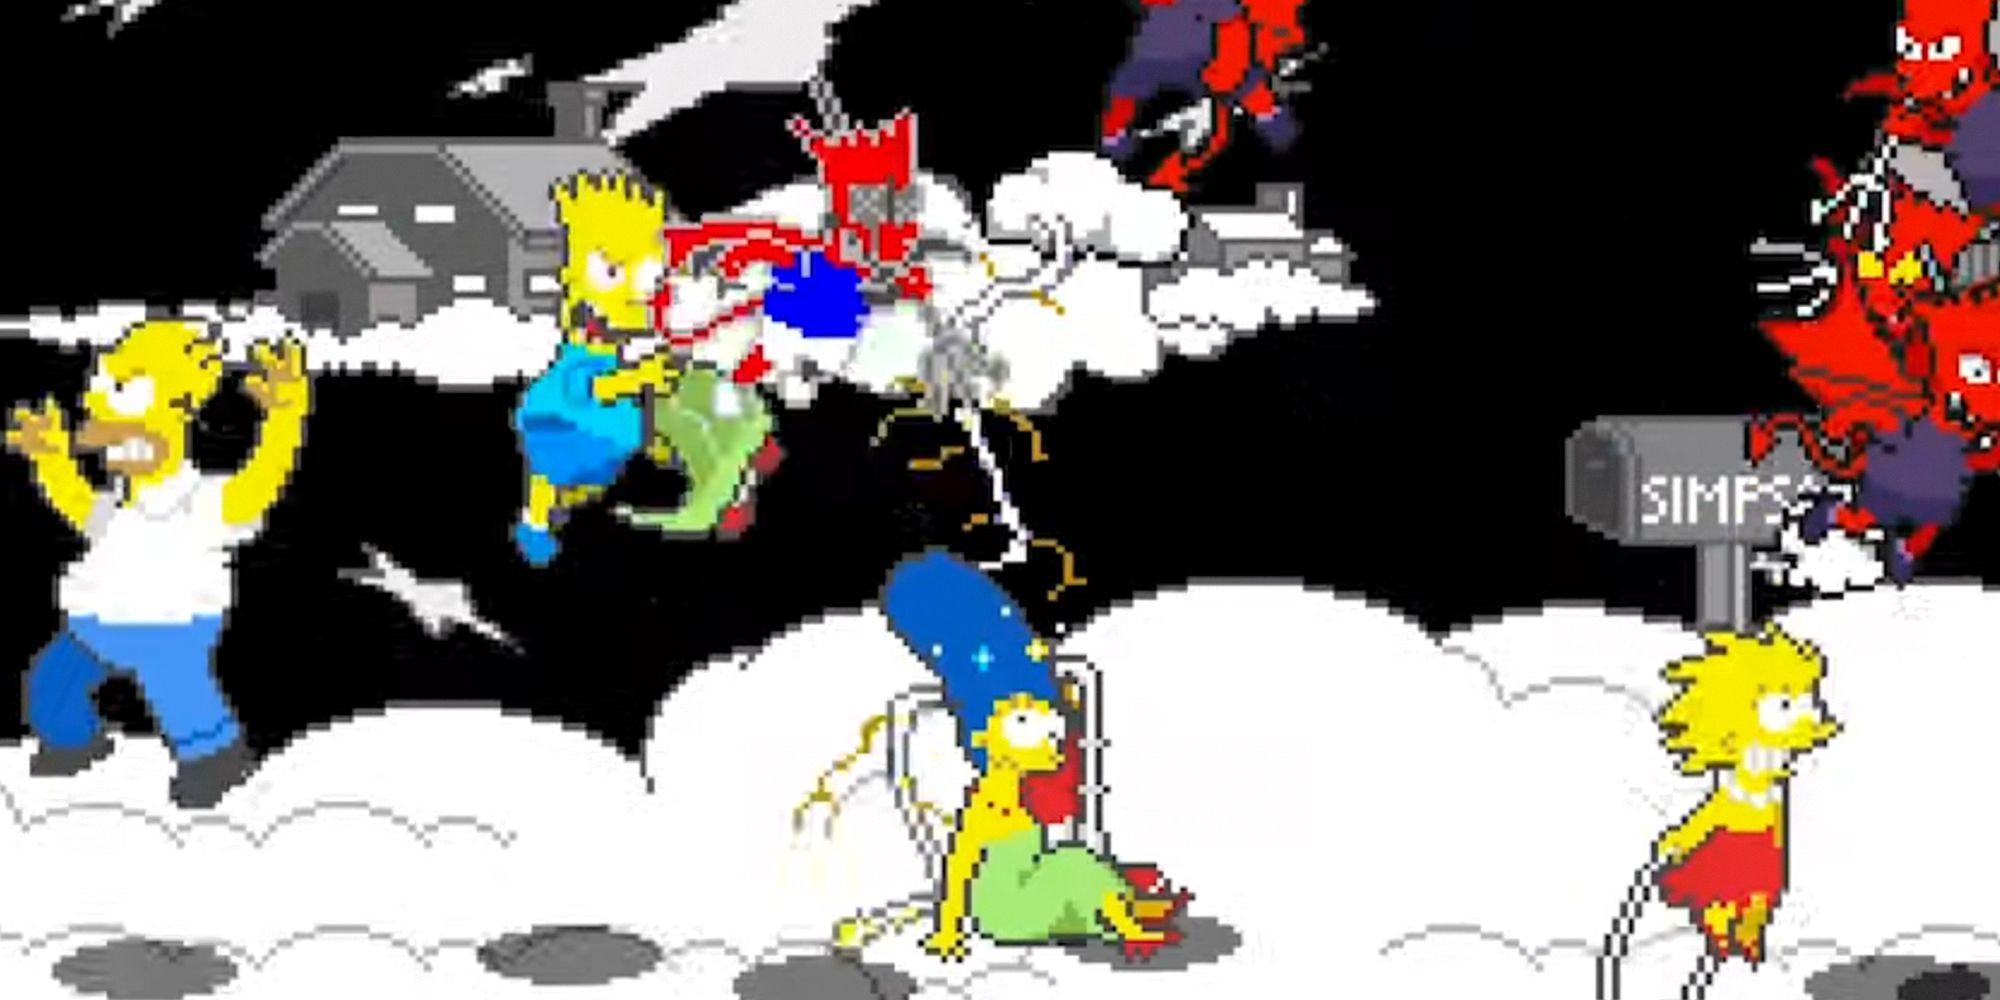 Simpsons Arcade fighting in Dreamland.